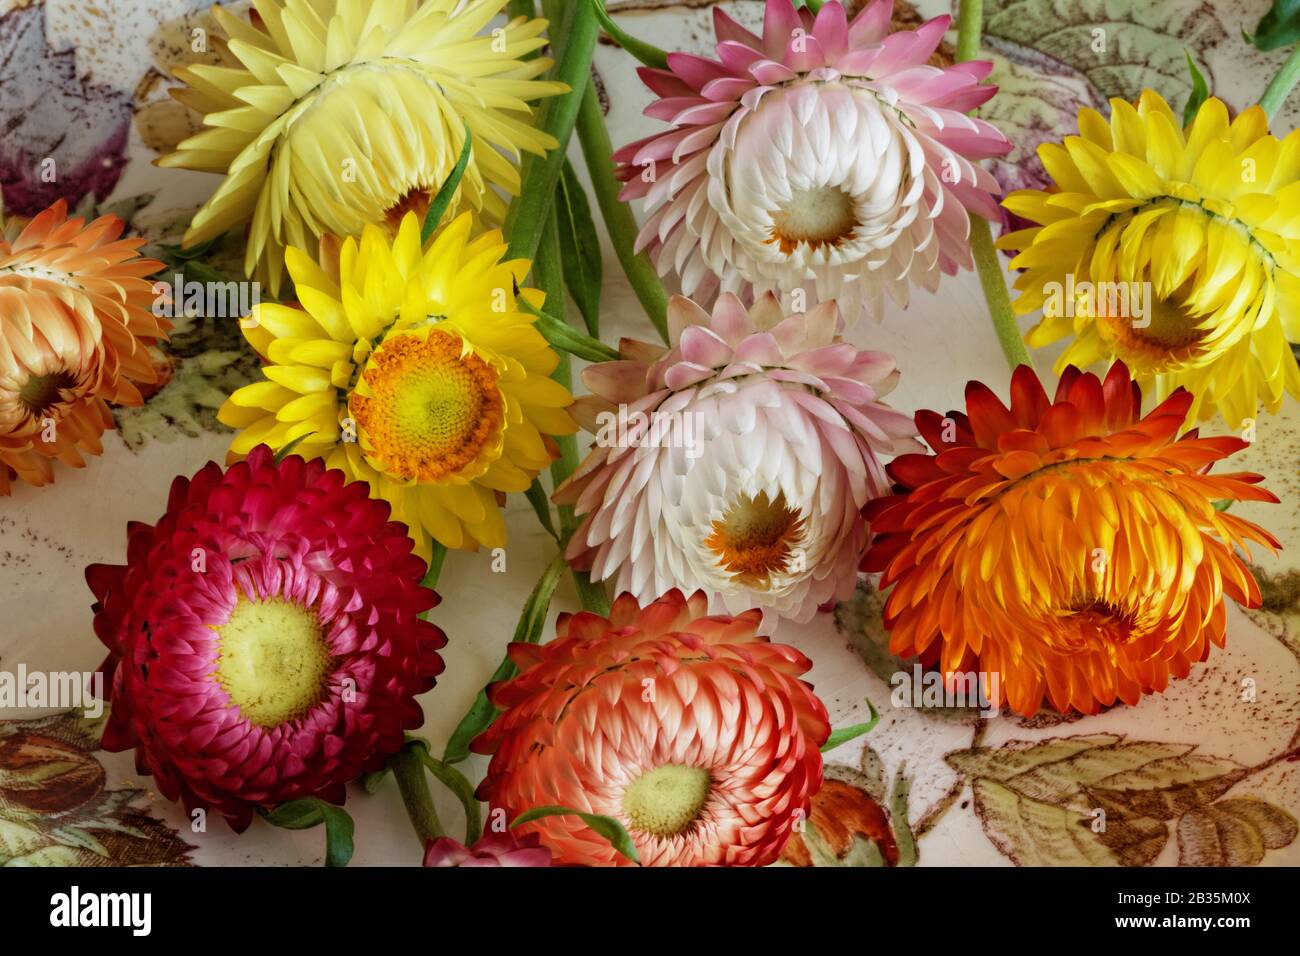 Freshly Cut Strawflowers: closeup view of freshly cut strawflowers with different forms and colours Stock Photo